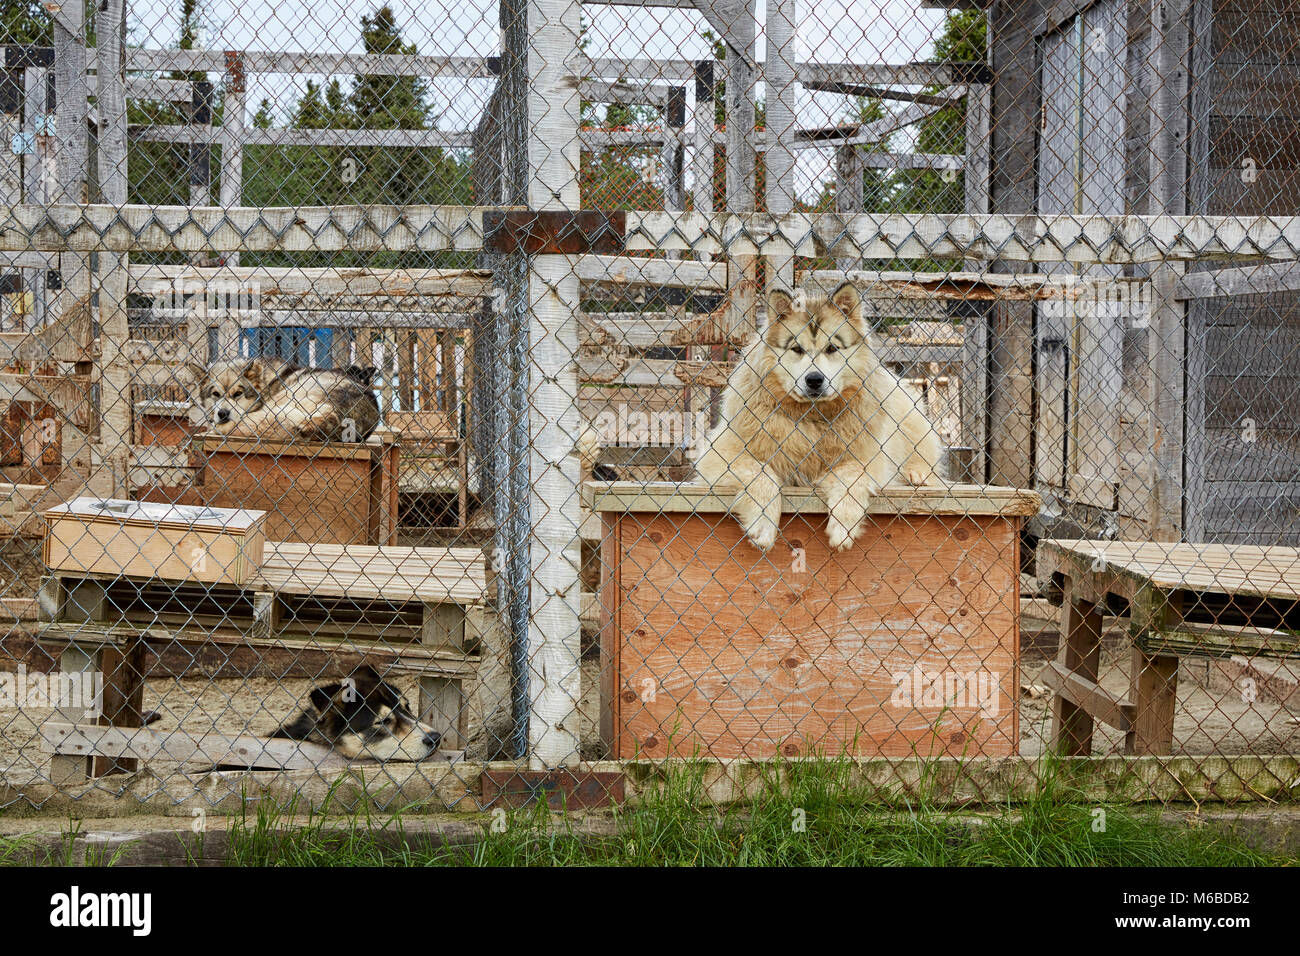 Alaska Malamute los perros en jaula, Fermont, Quebec, Canadá Foto de stock